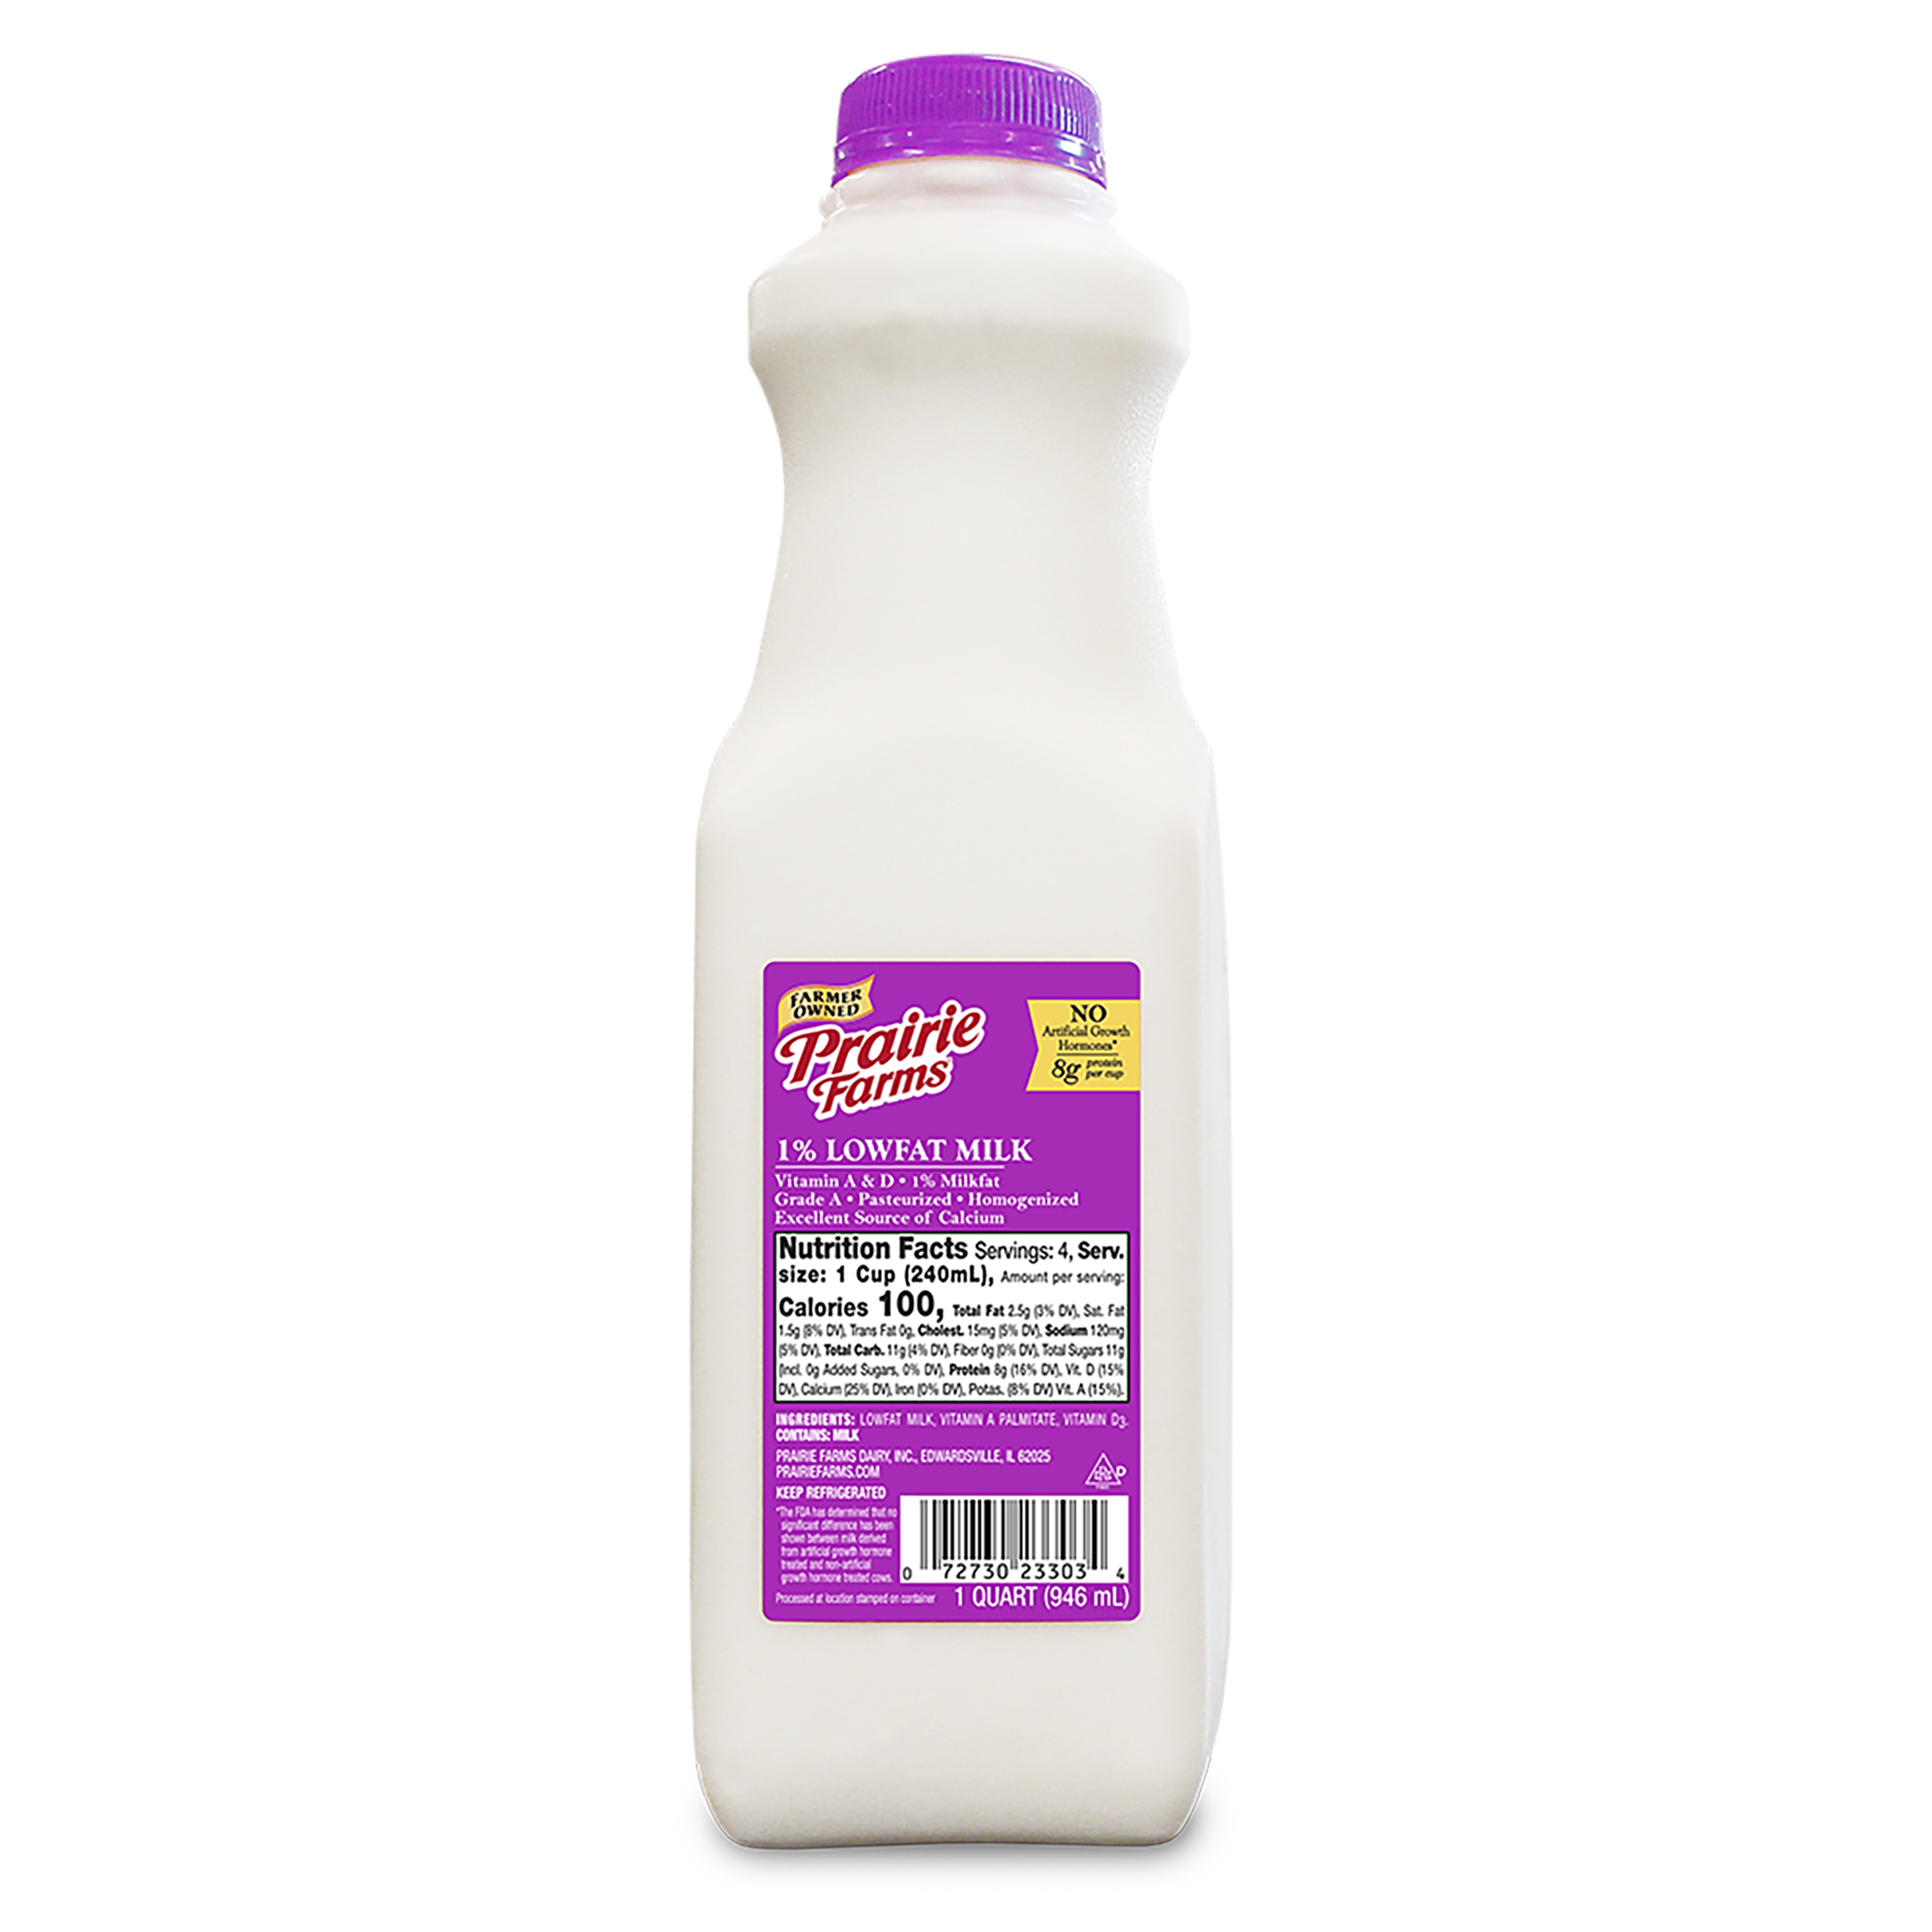 1% Lowfat Chocolate Milk - Prairie Farms Dairy, Inc.